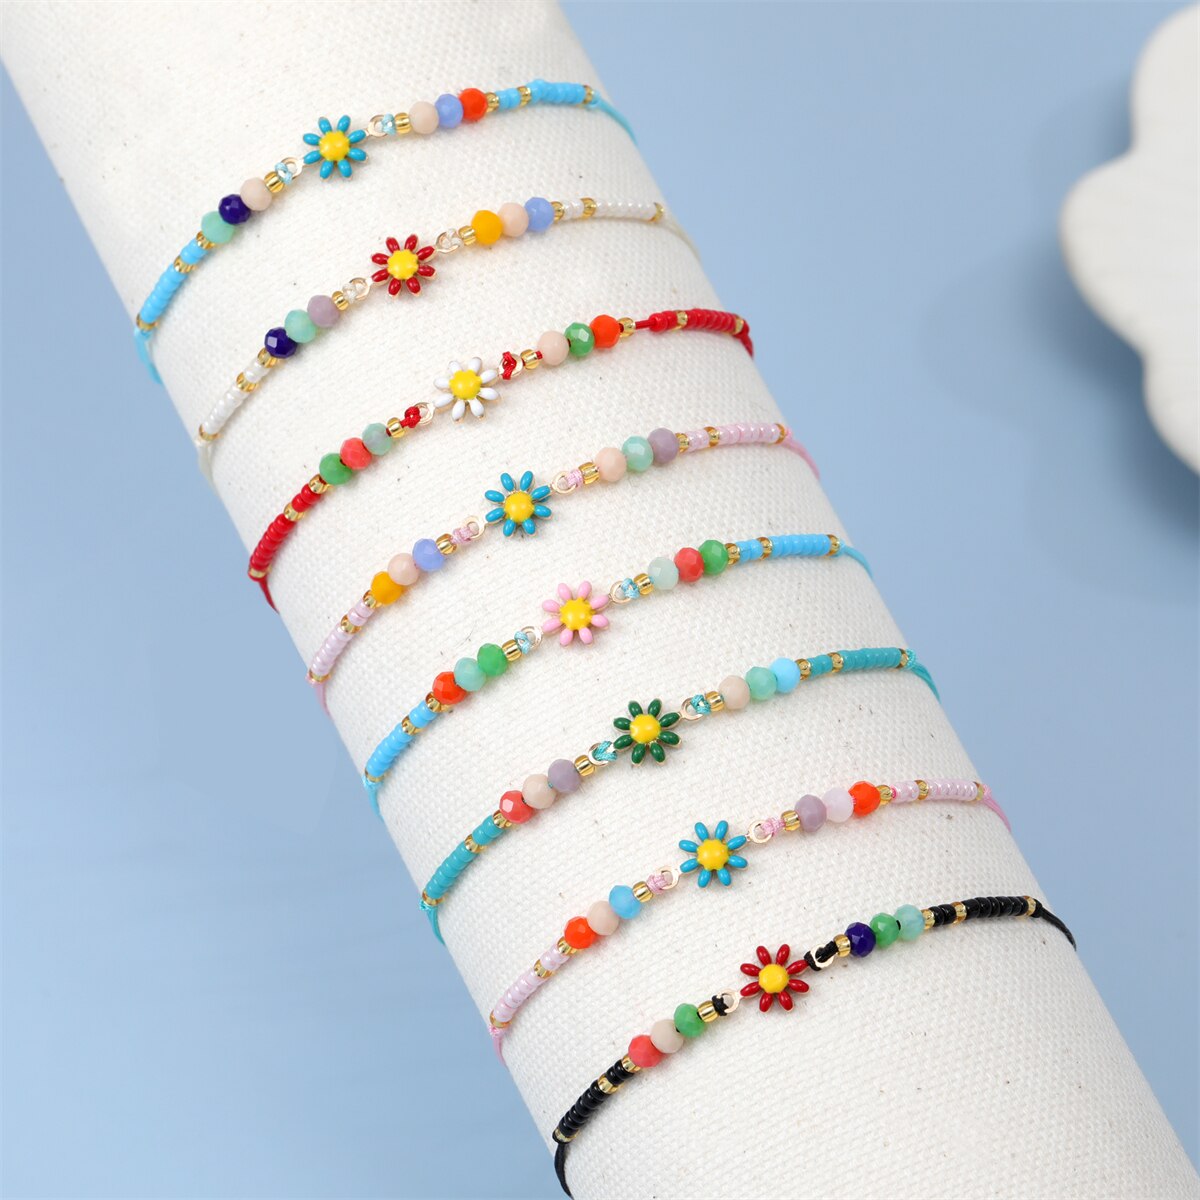 12pcs/lot Colorful Flower Women Bead Bracelets Summer Small Flowers Bohemian Handmade Adjustable Braided Bracelet Bangle Jewelry